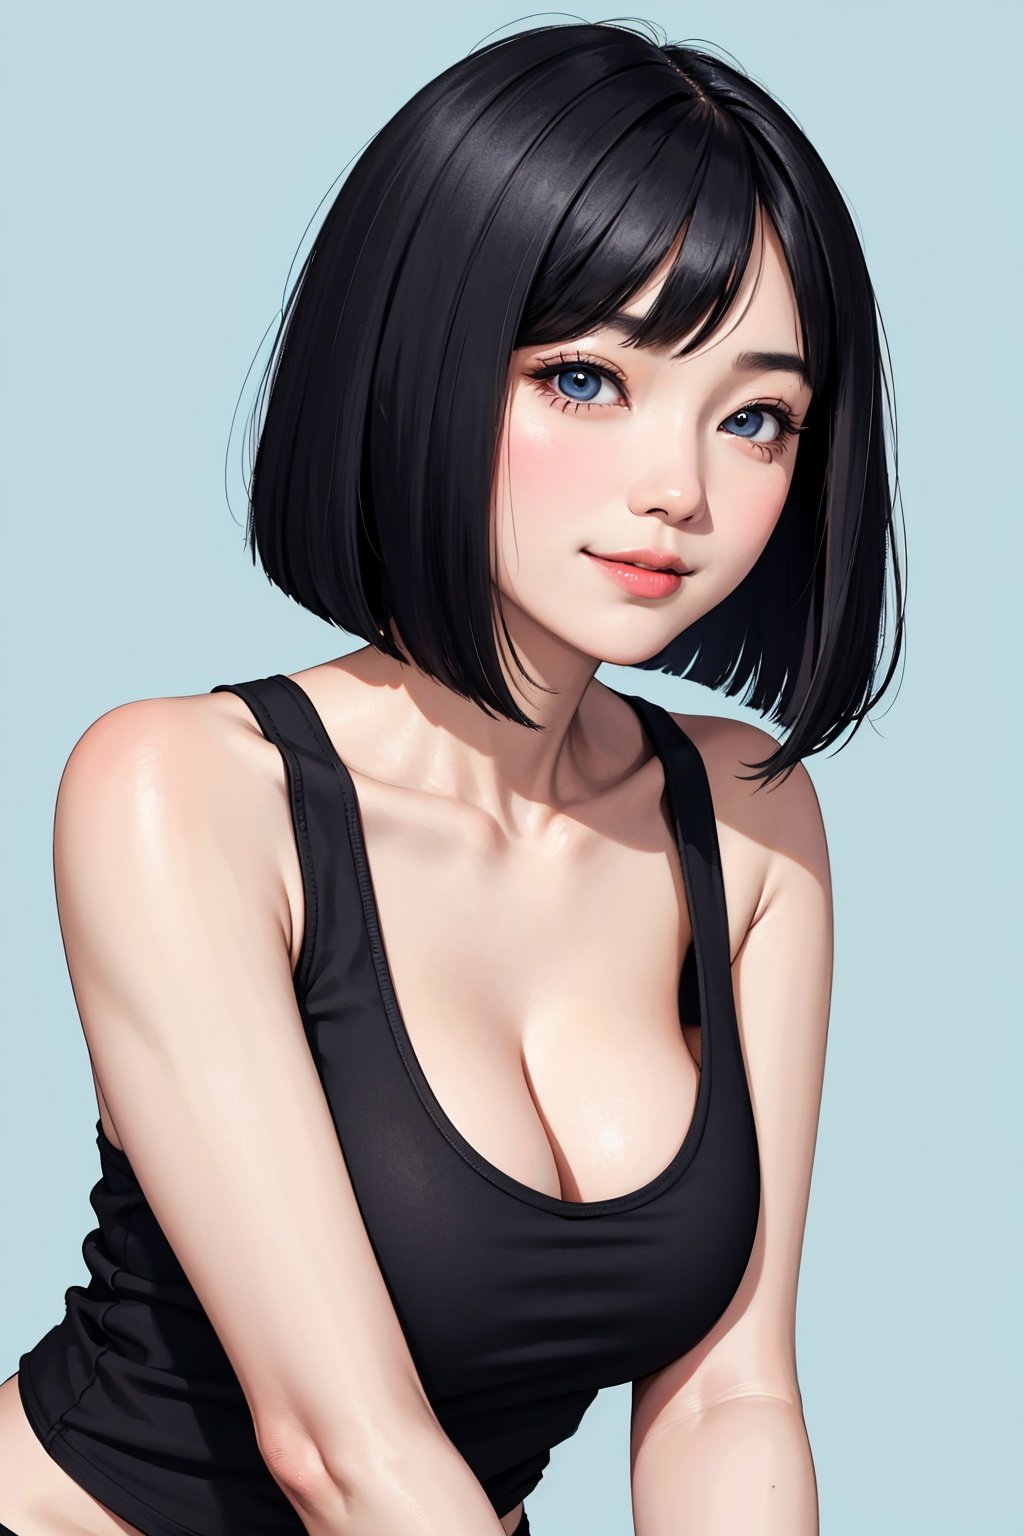 asian woman, bob cut, close-up, smile, large breast, (black tank top), (pastel blue background)